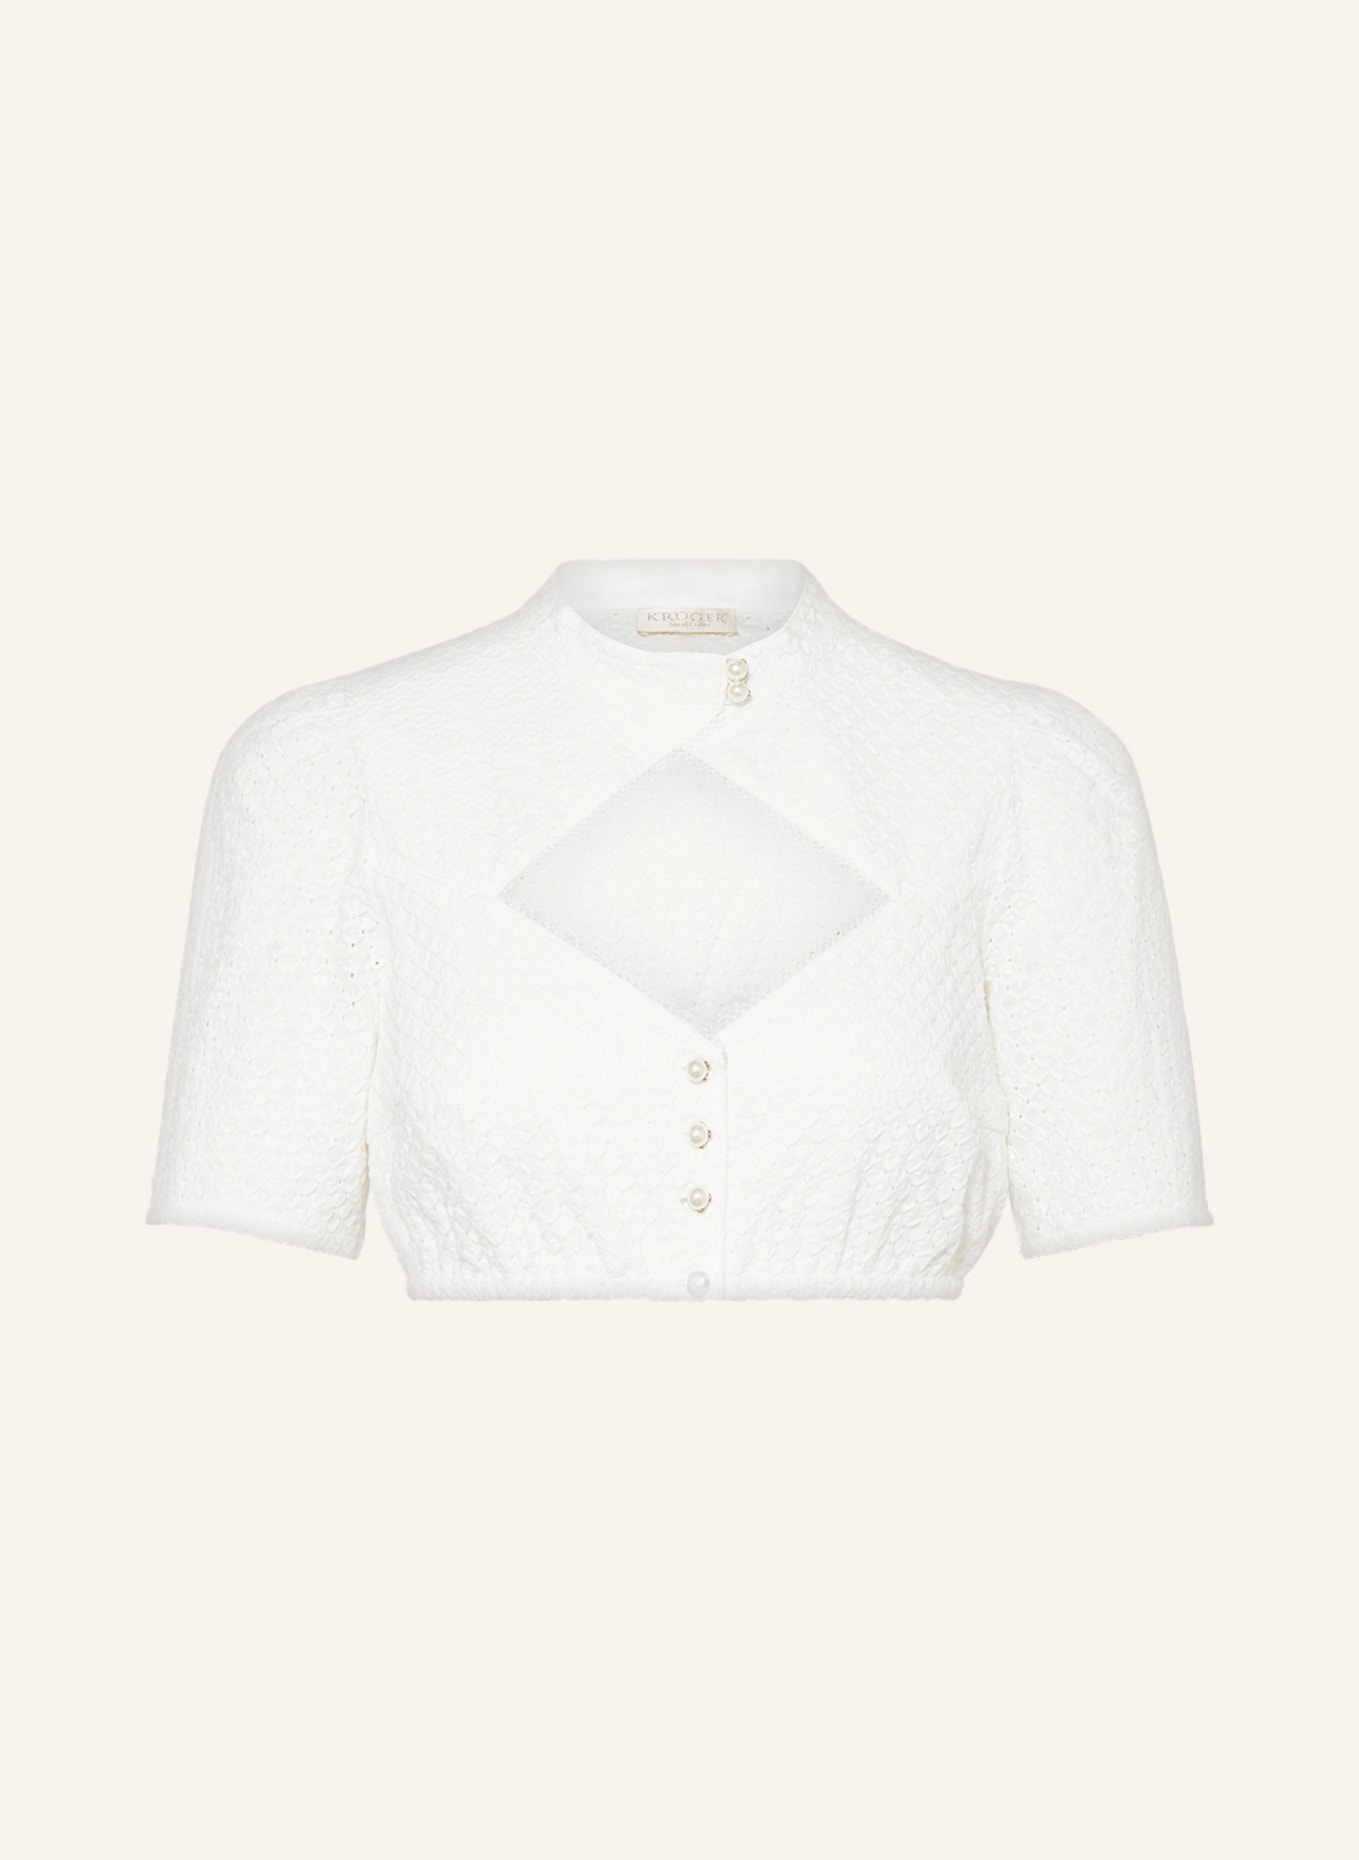 KRÜGER Dirndl blouse made of lace, Color: WHITE (Image 1)